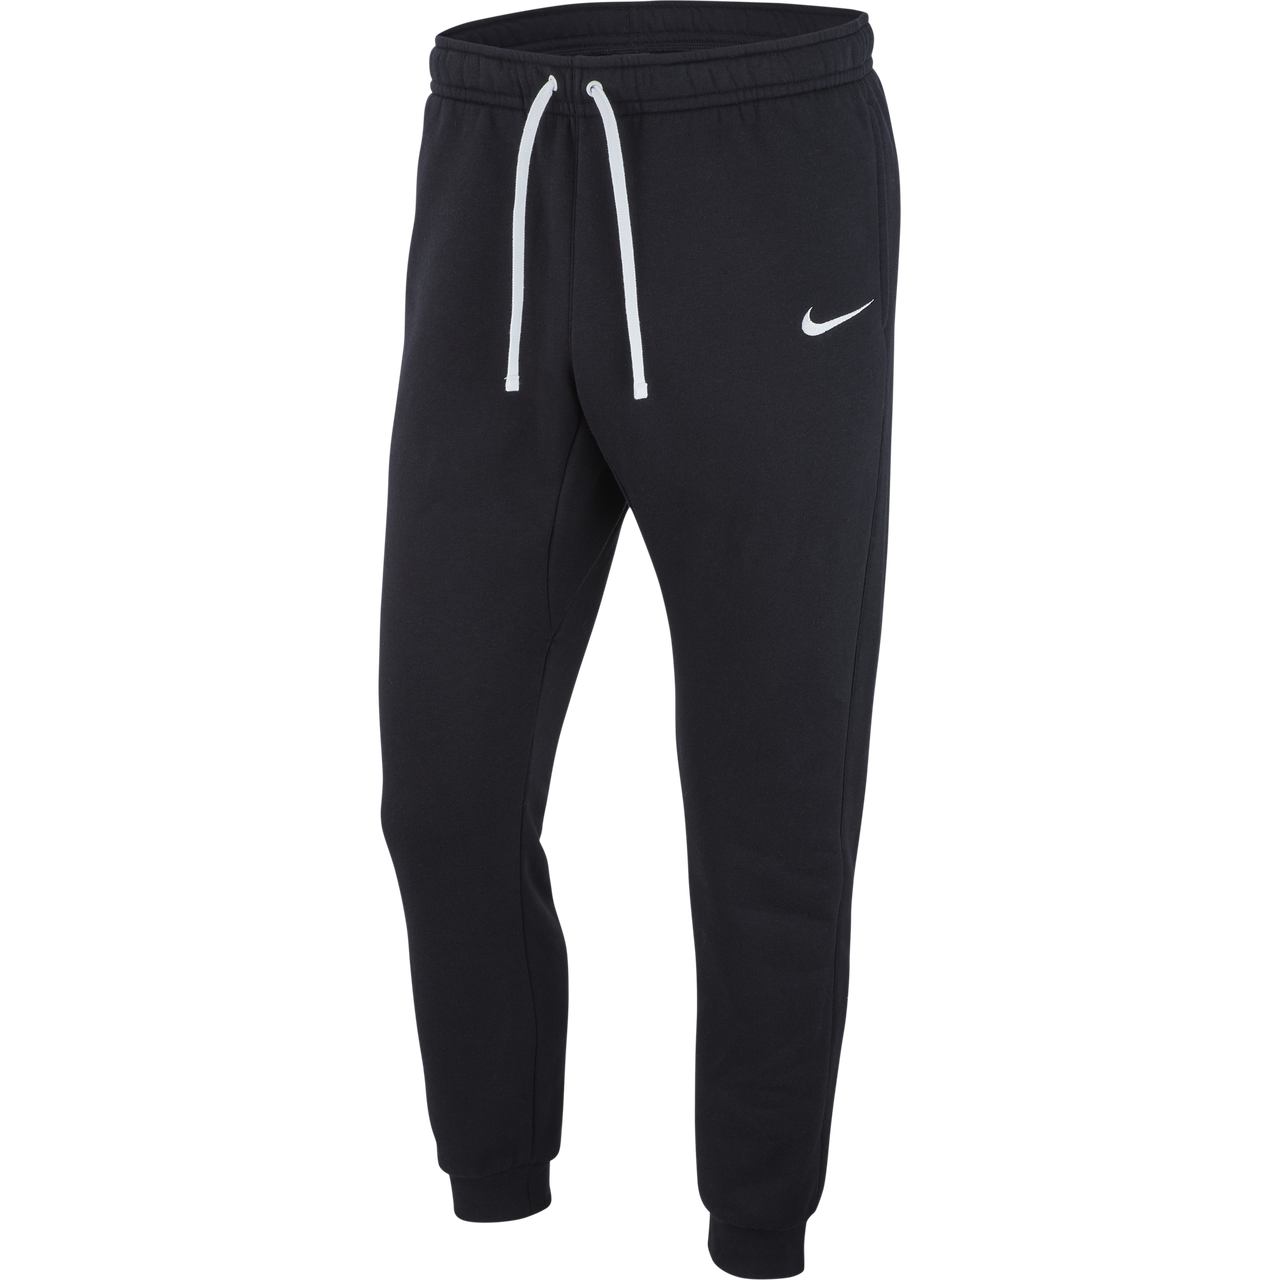 Nike Lifestyle Team Club 19 Pants